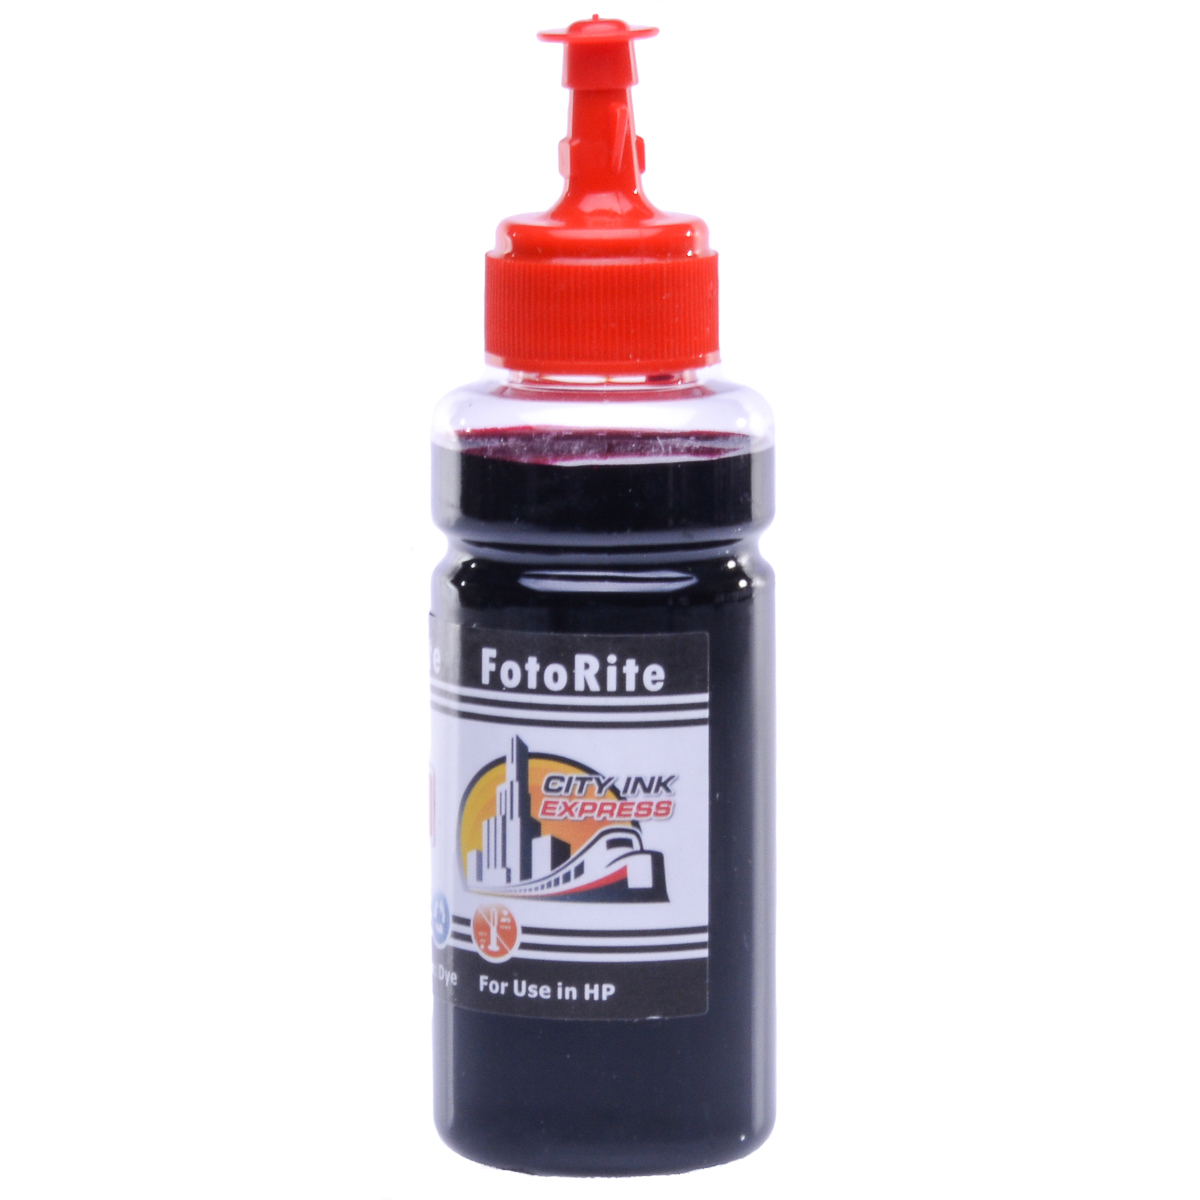 Cheap Magenta dye ink replaces HP Photosmart C310c - HP 364